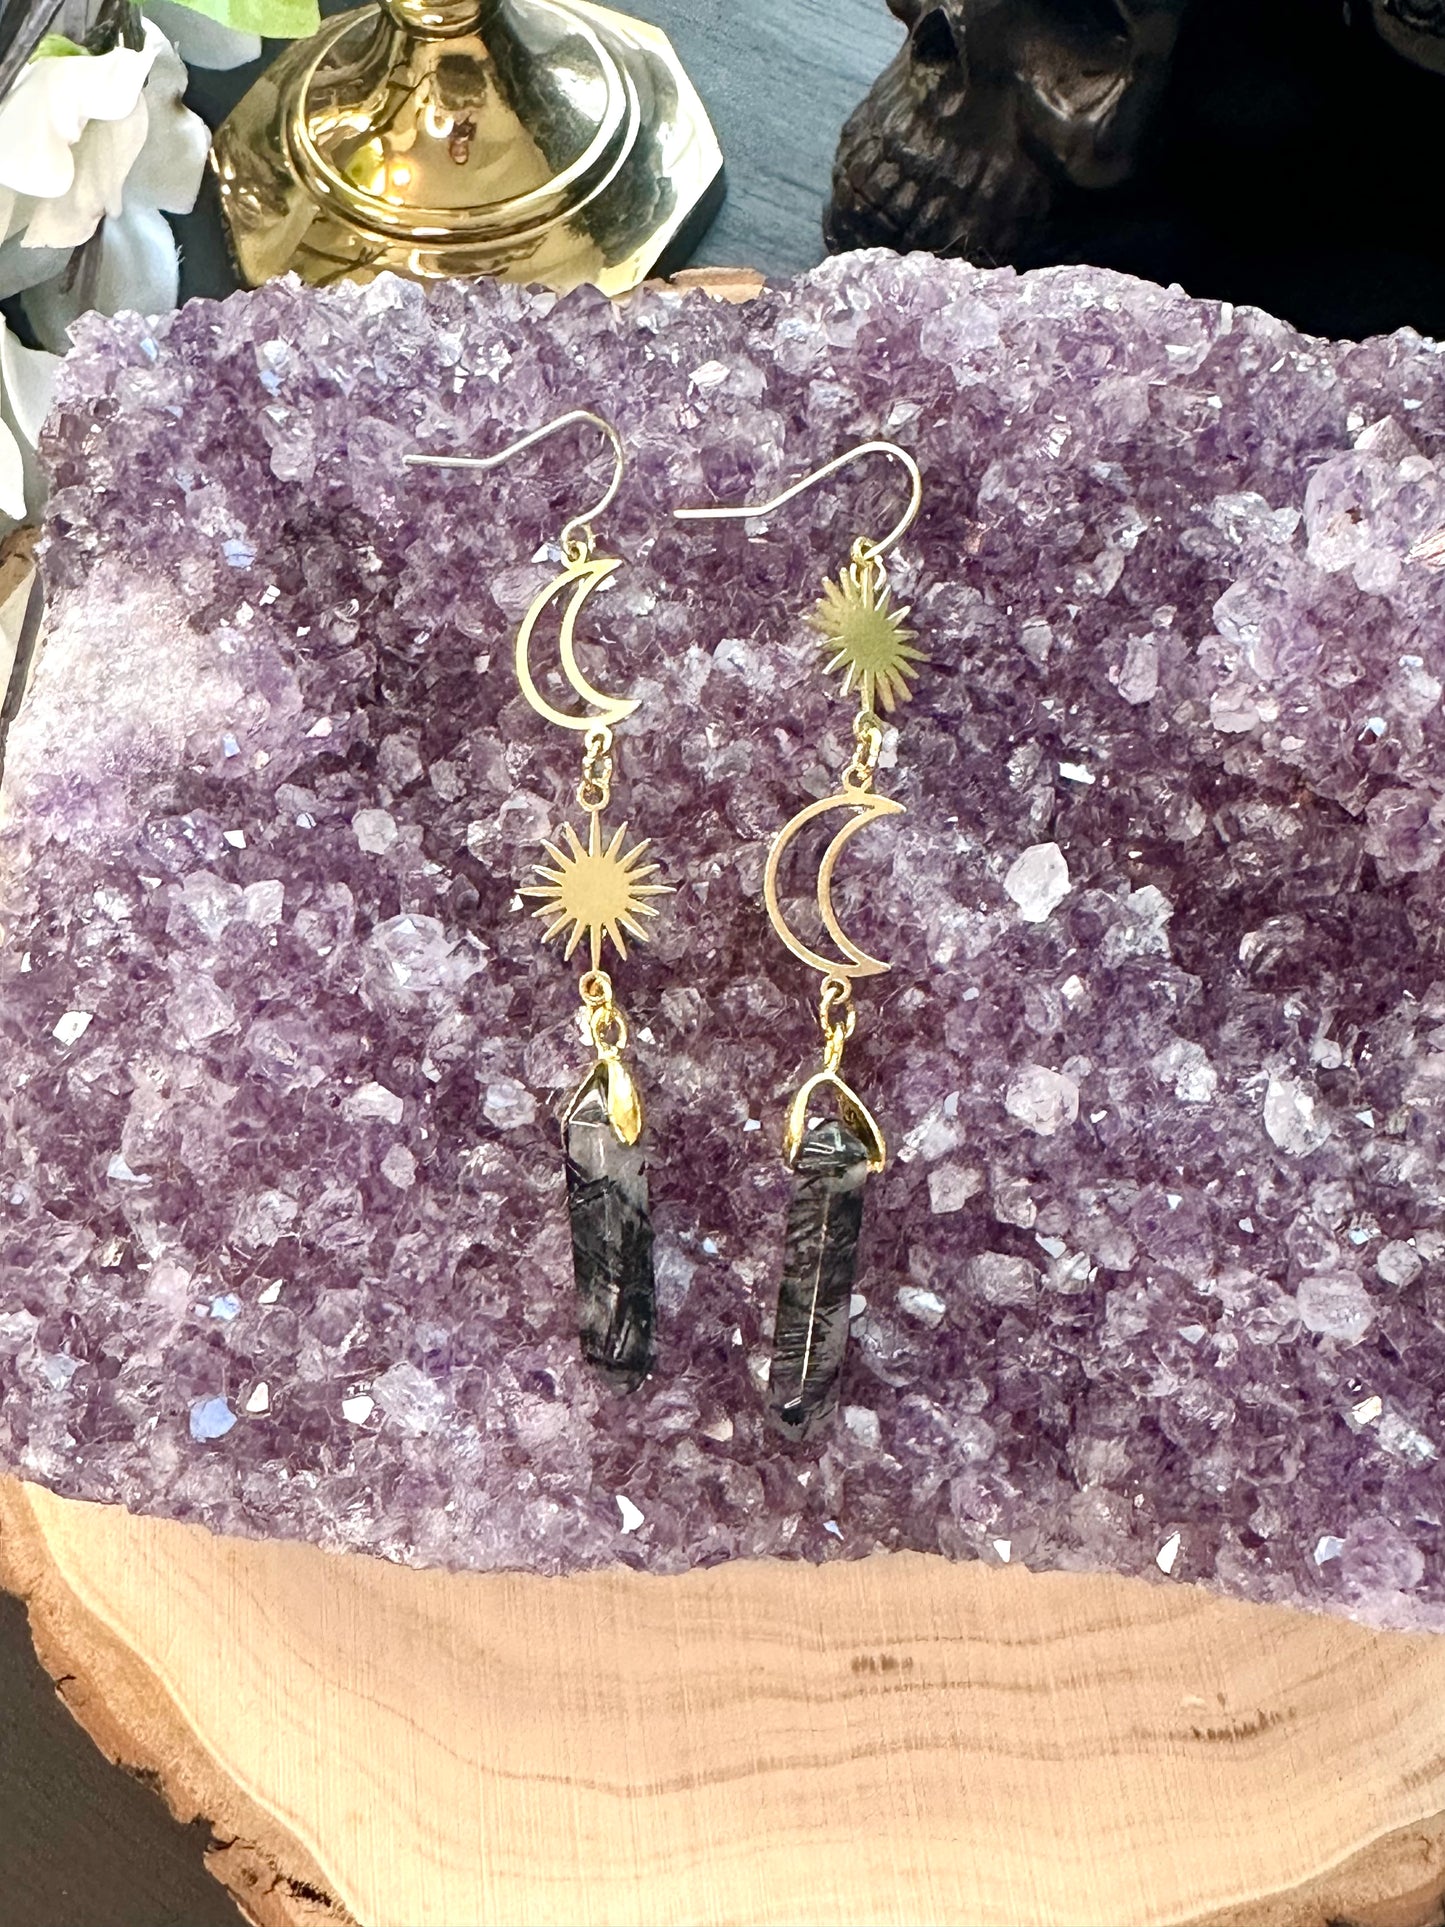 Black tourmaline in quartz moon and sun earrings